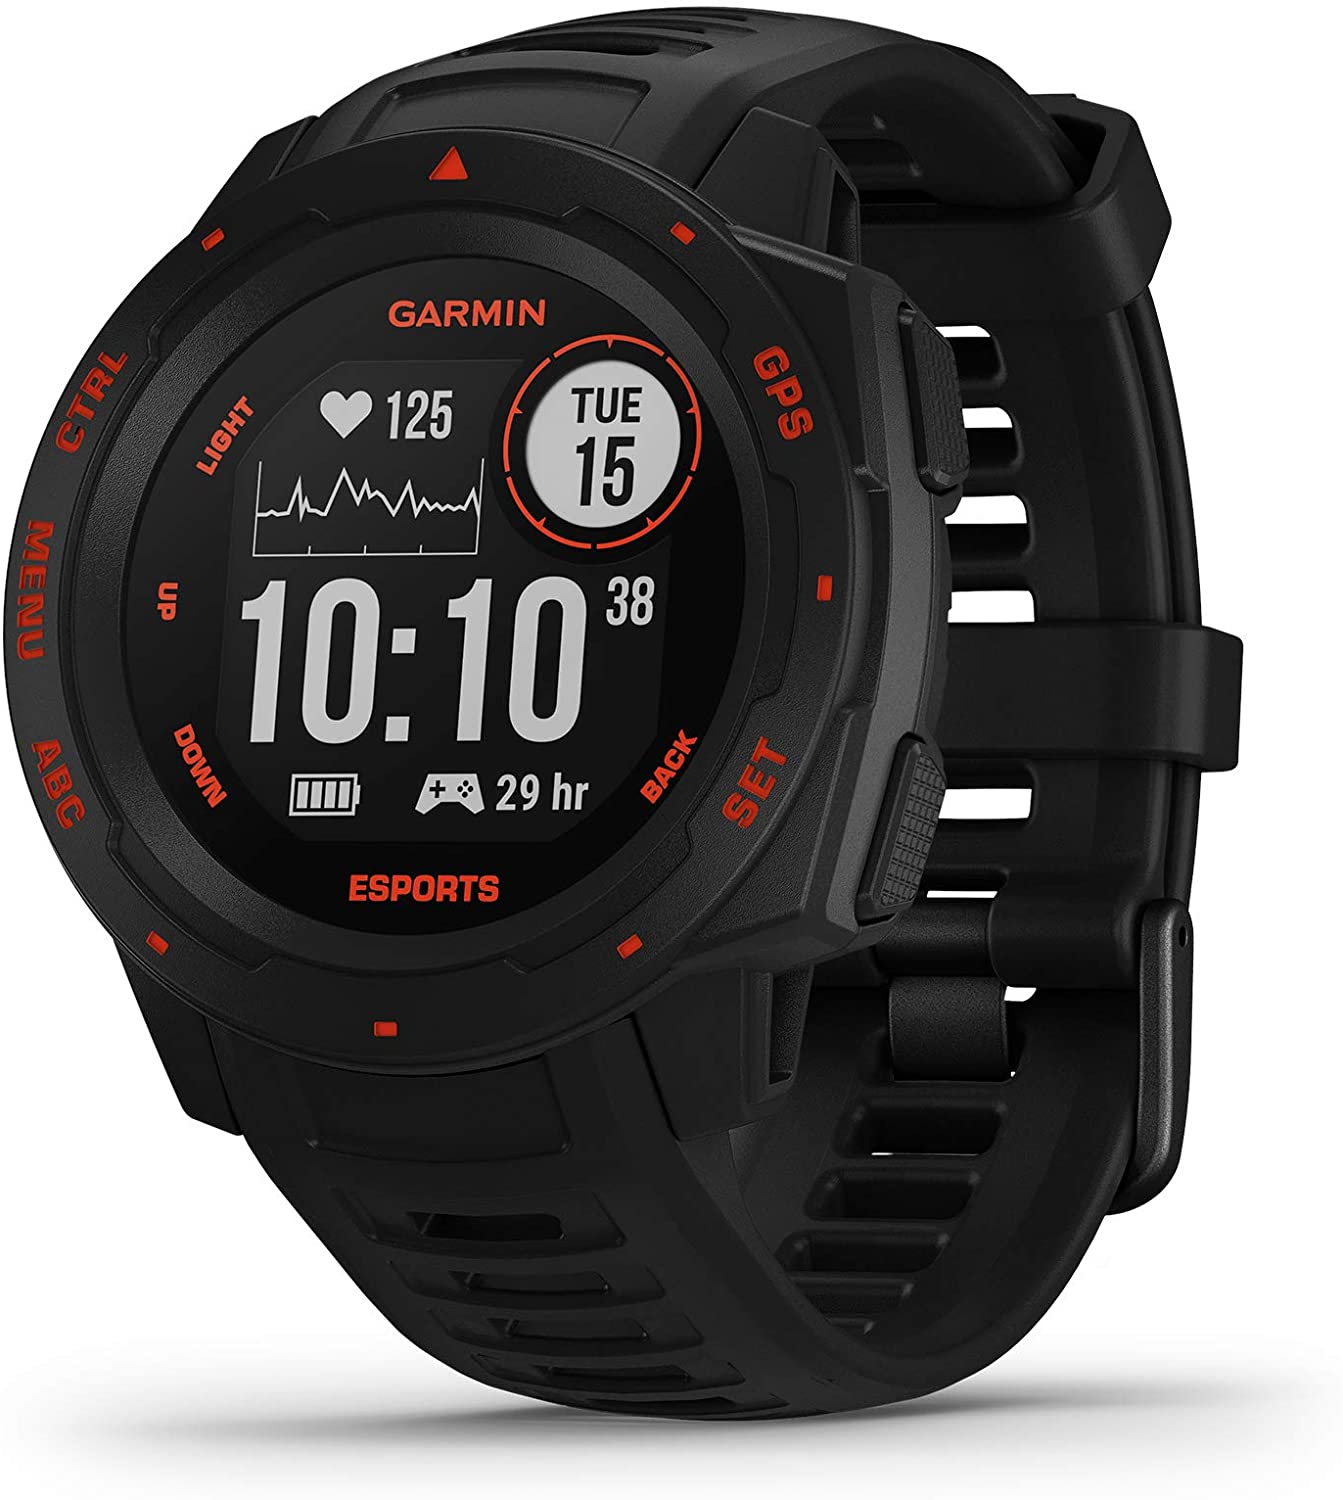 Garmin Instinct Esports Edition Smartwatch $149 + free s/h at Amazon / Gamestop